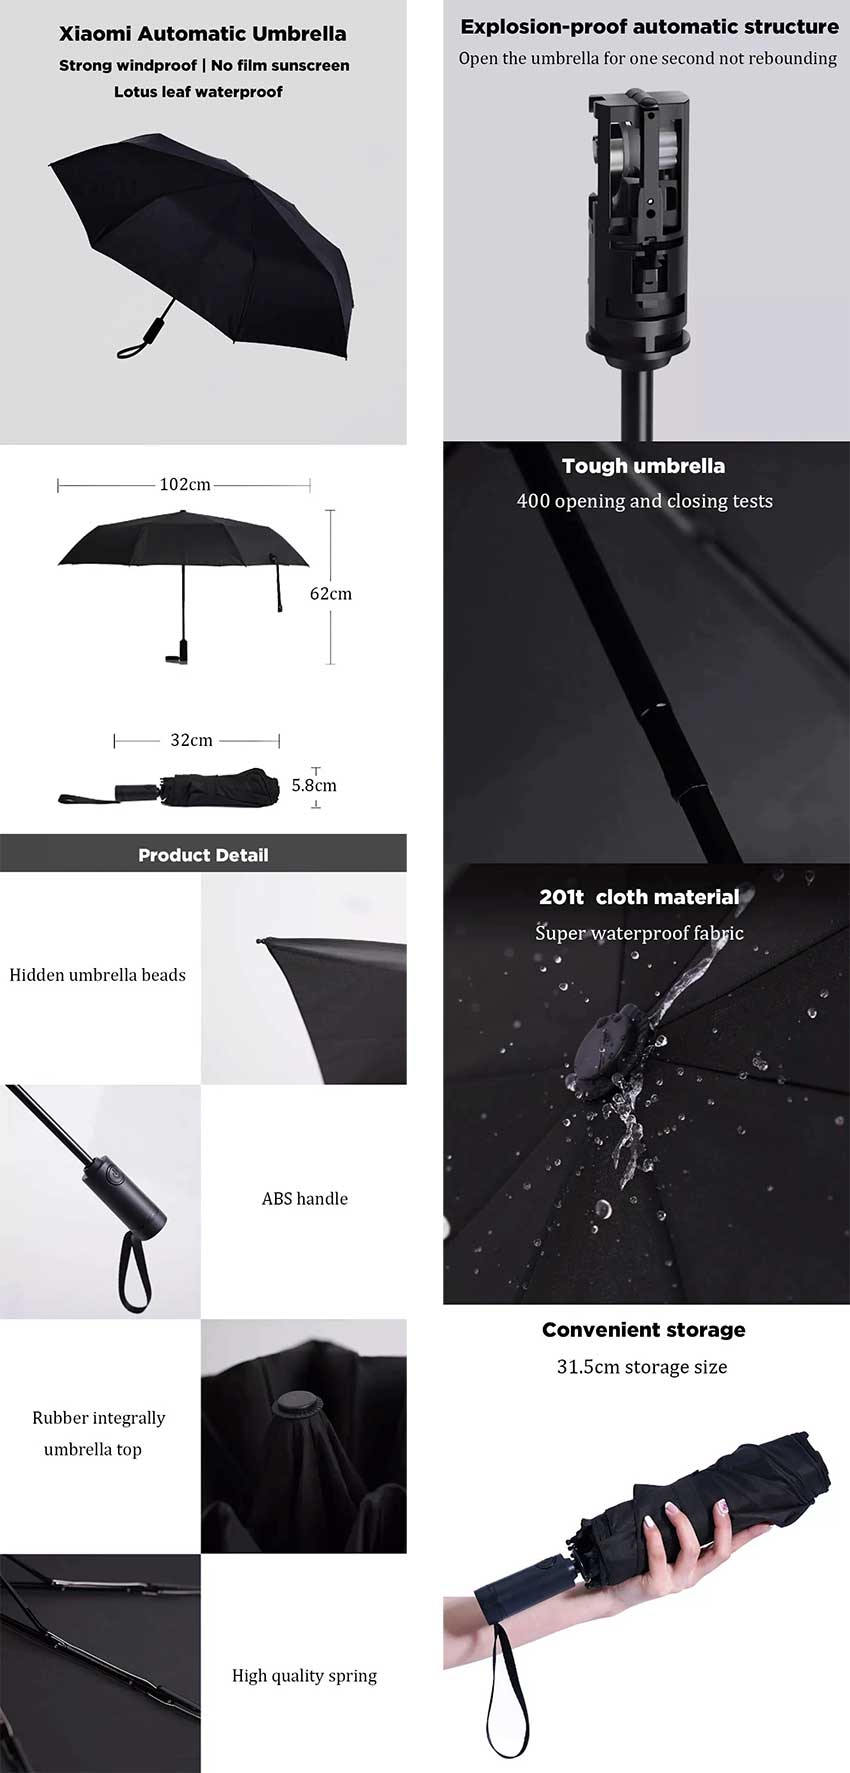 Xiaomi-WD1-Automatic-Umbrella.jpg?1626003841215